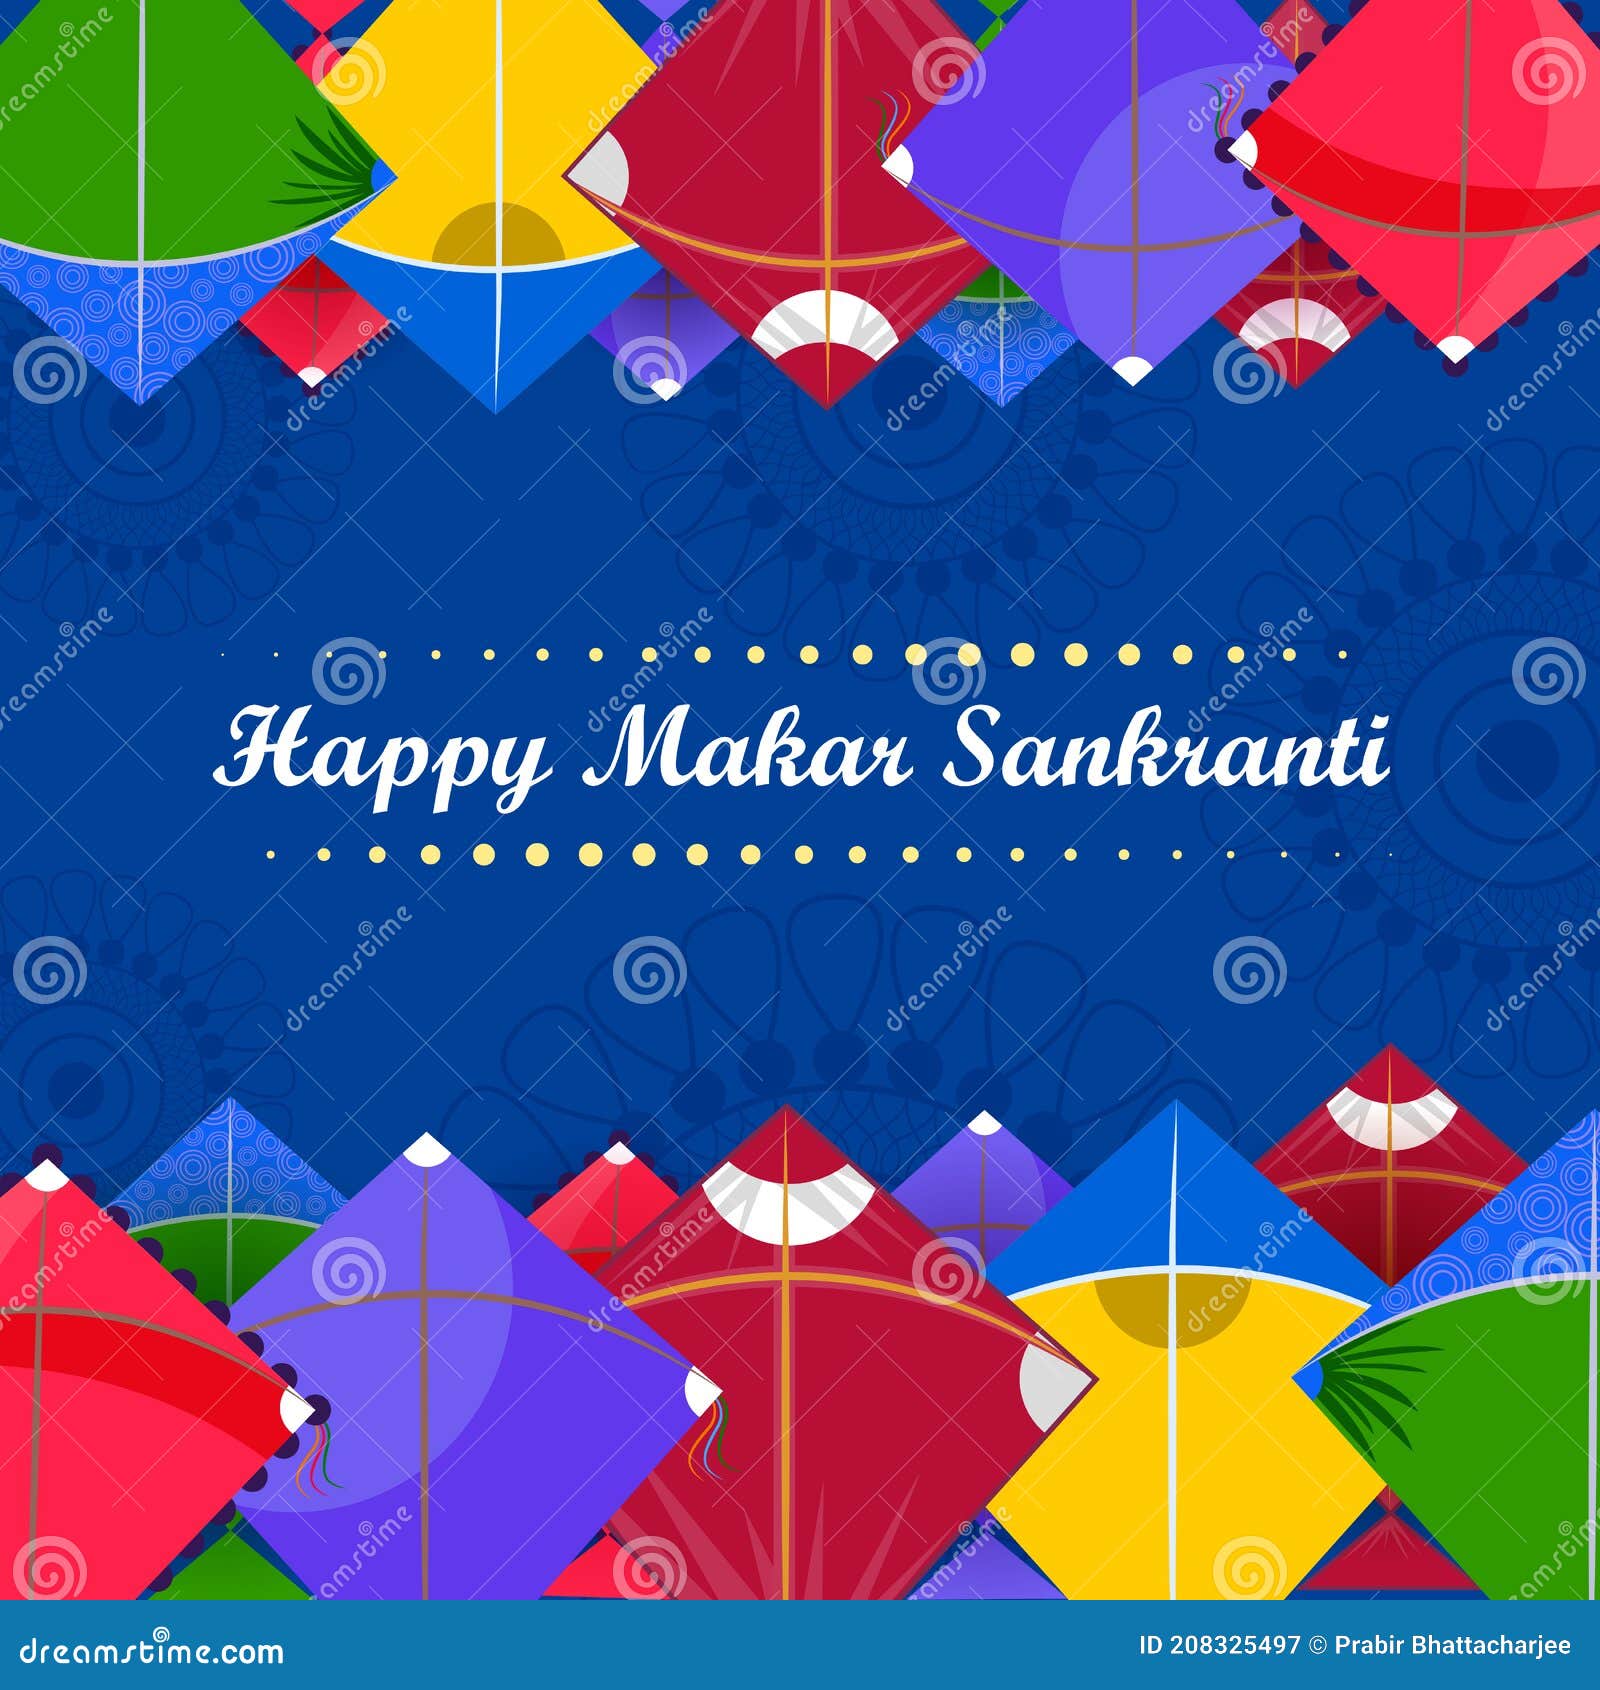 Happy Makar Sankranti Religious Traditional Festival of India Celebration  Background Stock Vector - Illustration of card, design: 208325497